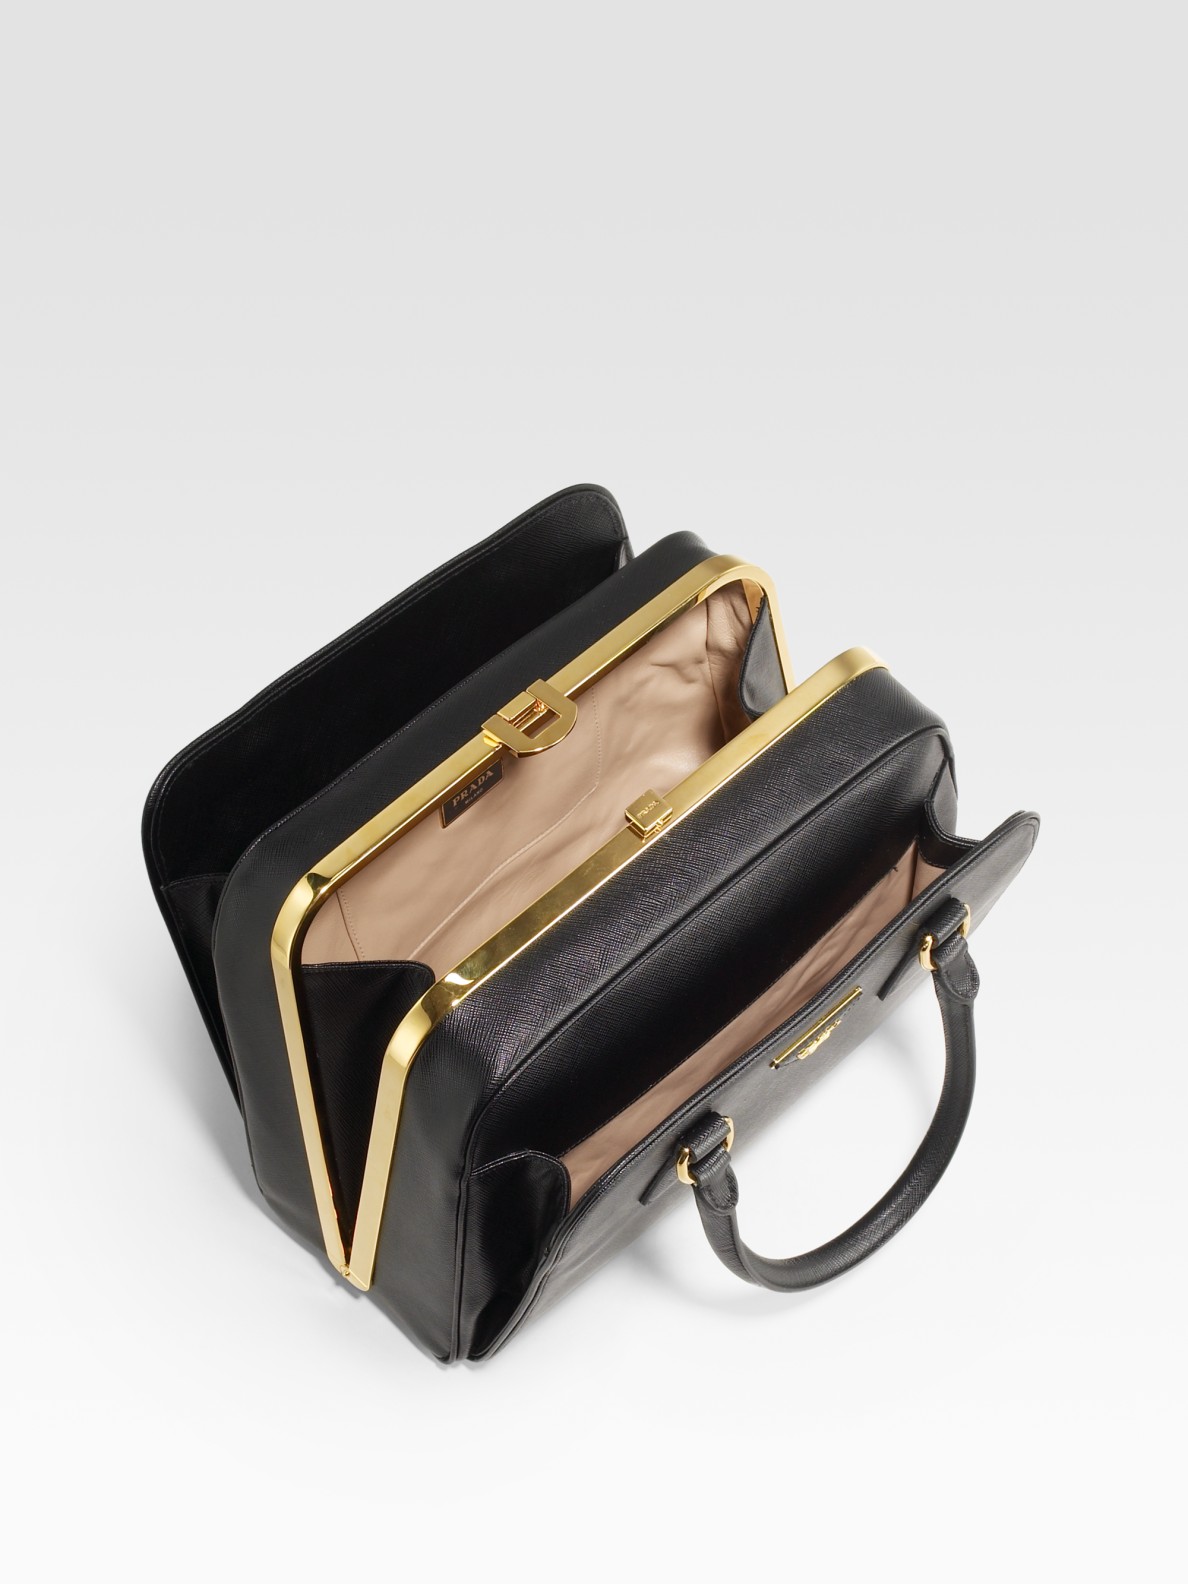 Prada Saffiano Borsa Cerniera Top Handle Bag in Black | Lyst  